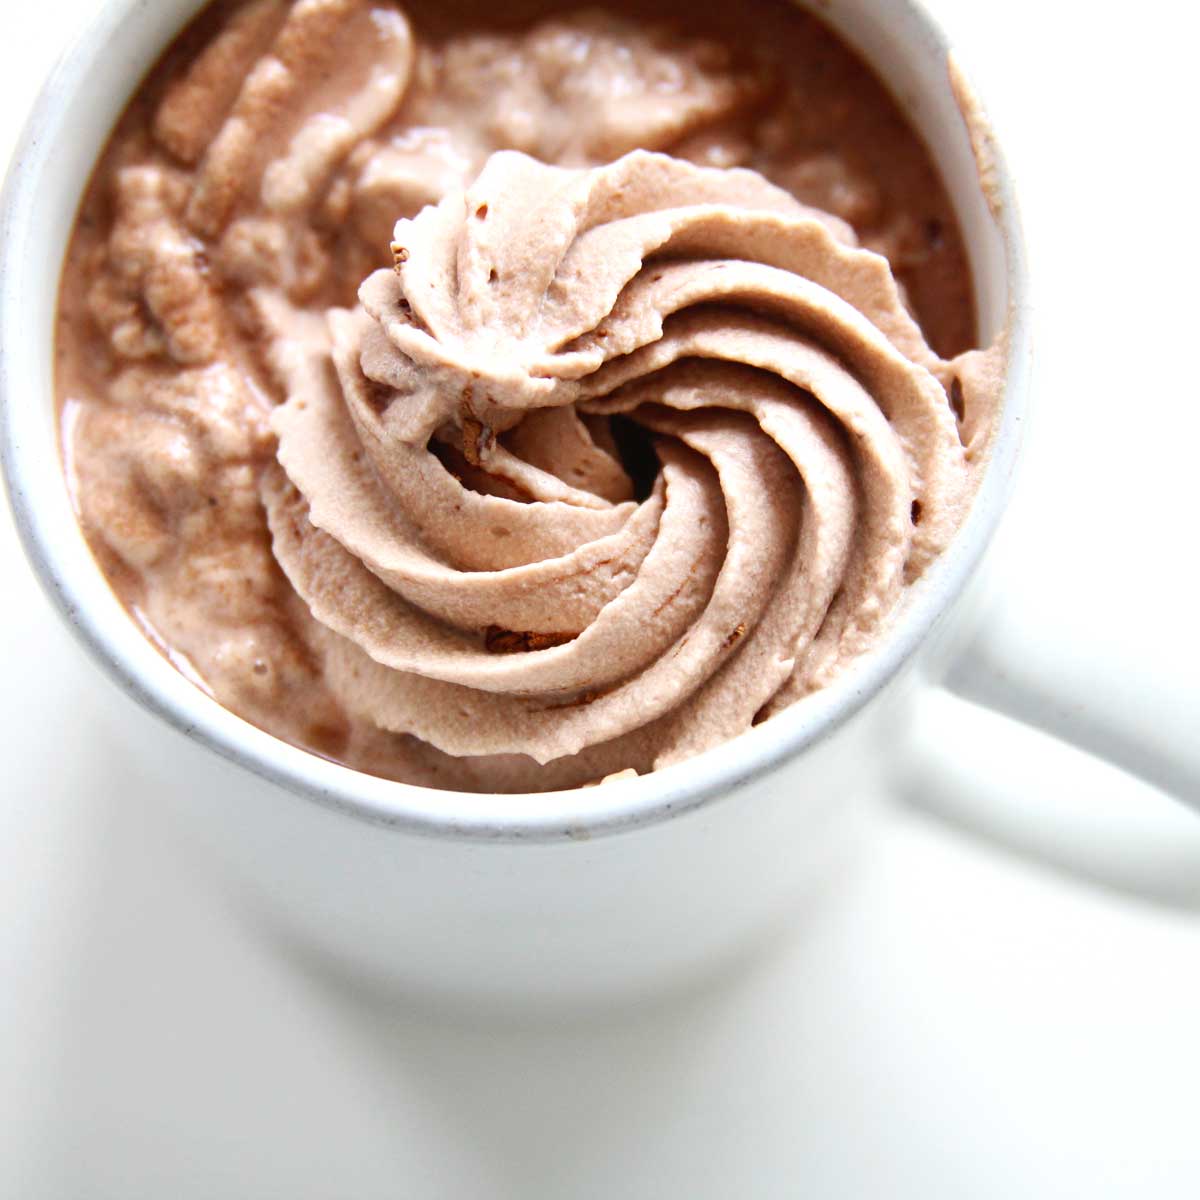 Easy No-Fuss Chocolate Whipped Cream Recipe Using Cocoa Powder